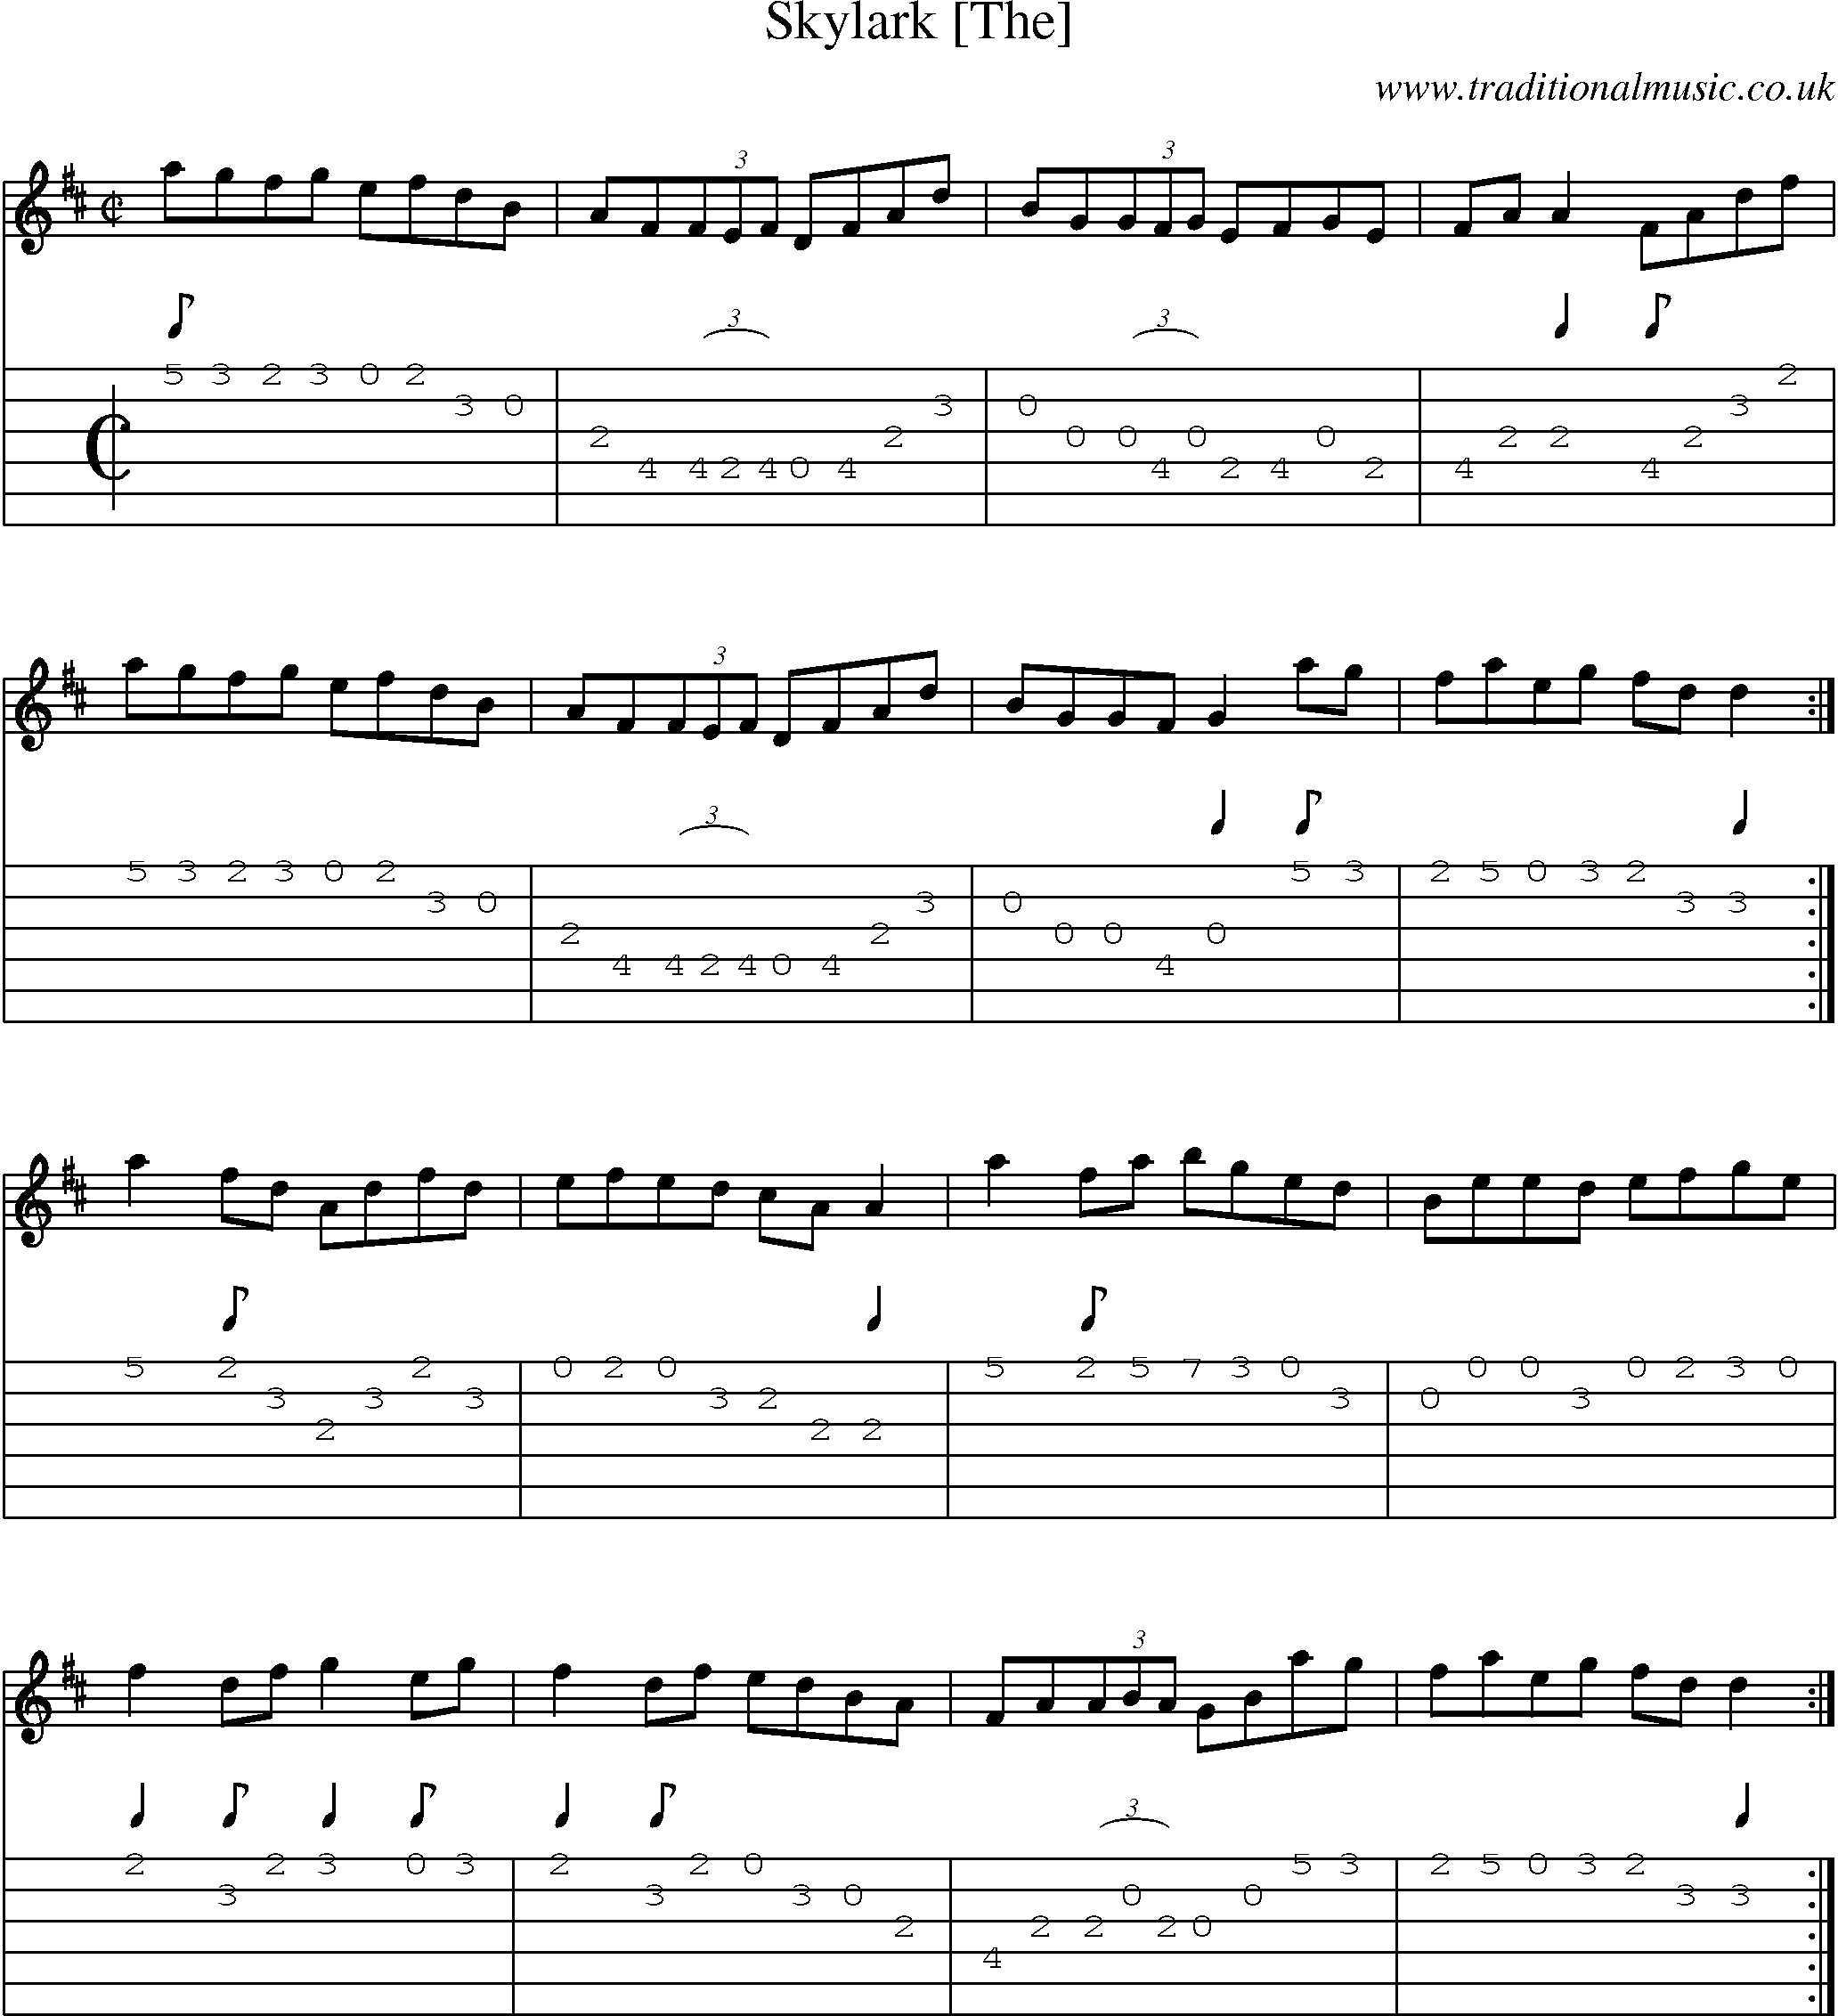 Music Score and Guitar Tabs for Skylark [the]